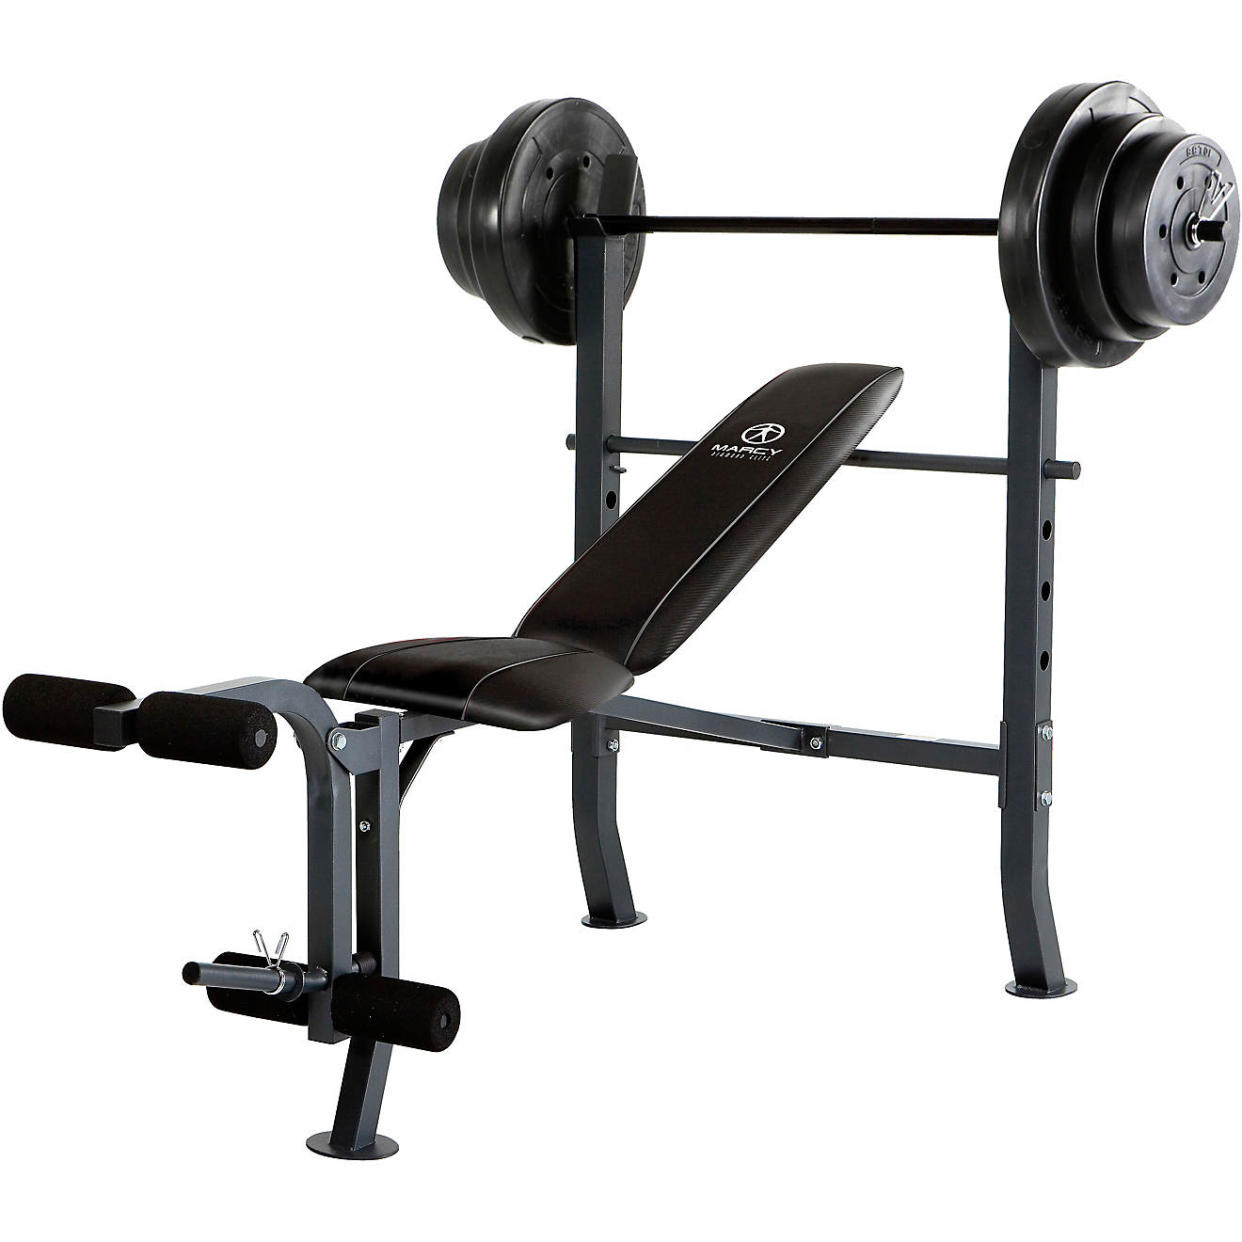 Black weight bench with 100-pound weight set.